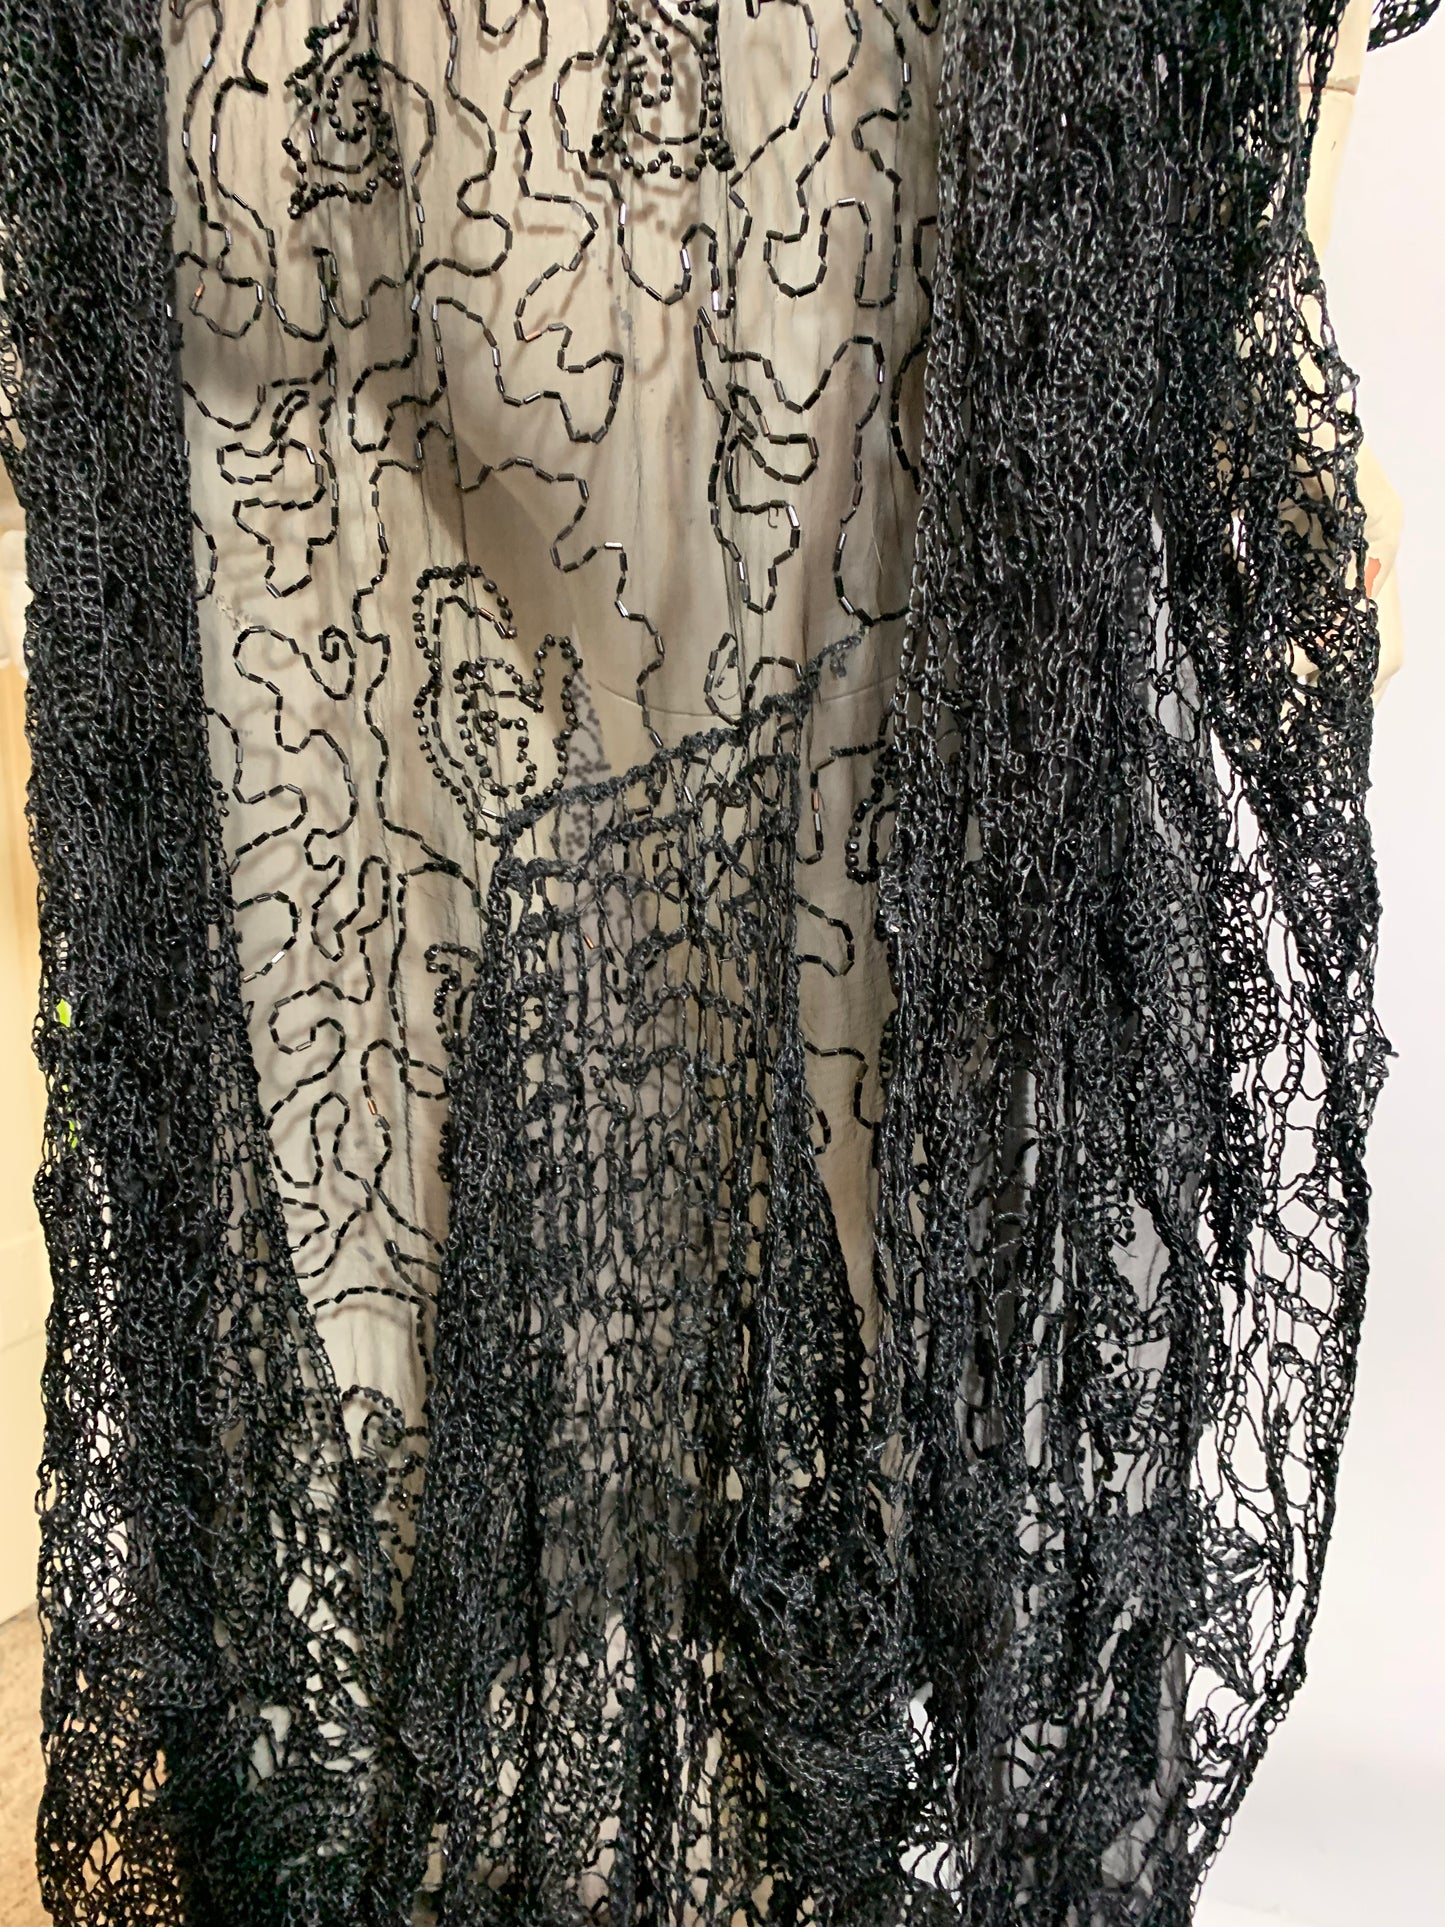 Sheer Black Silk Beaded Dress with Spanish Shawl Inspired Crochet Adornment circa 1920s